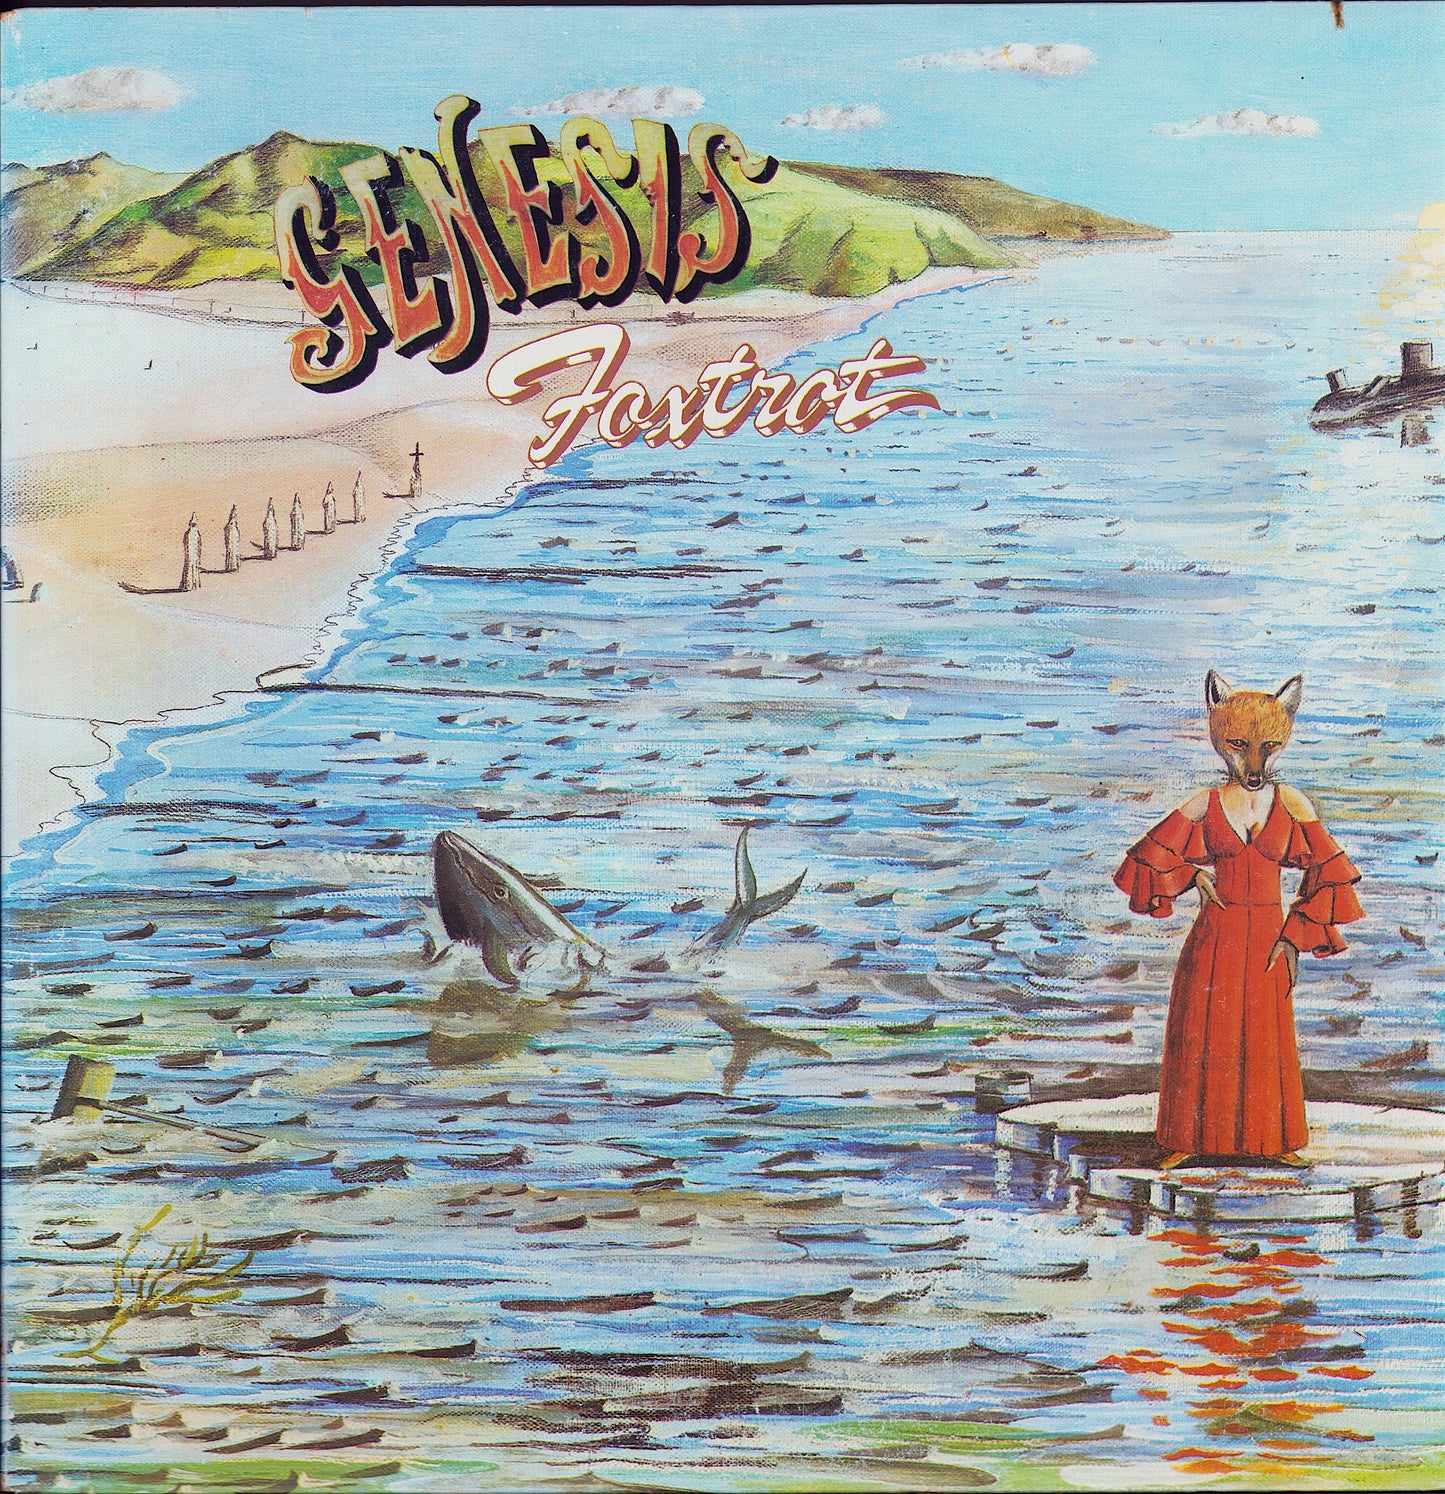 Genesis - Foxtrot (Vinyl LP) US